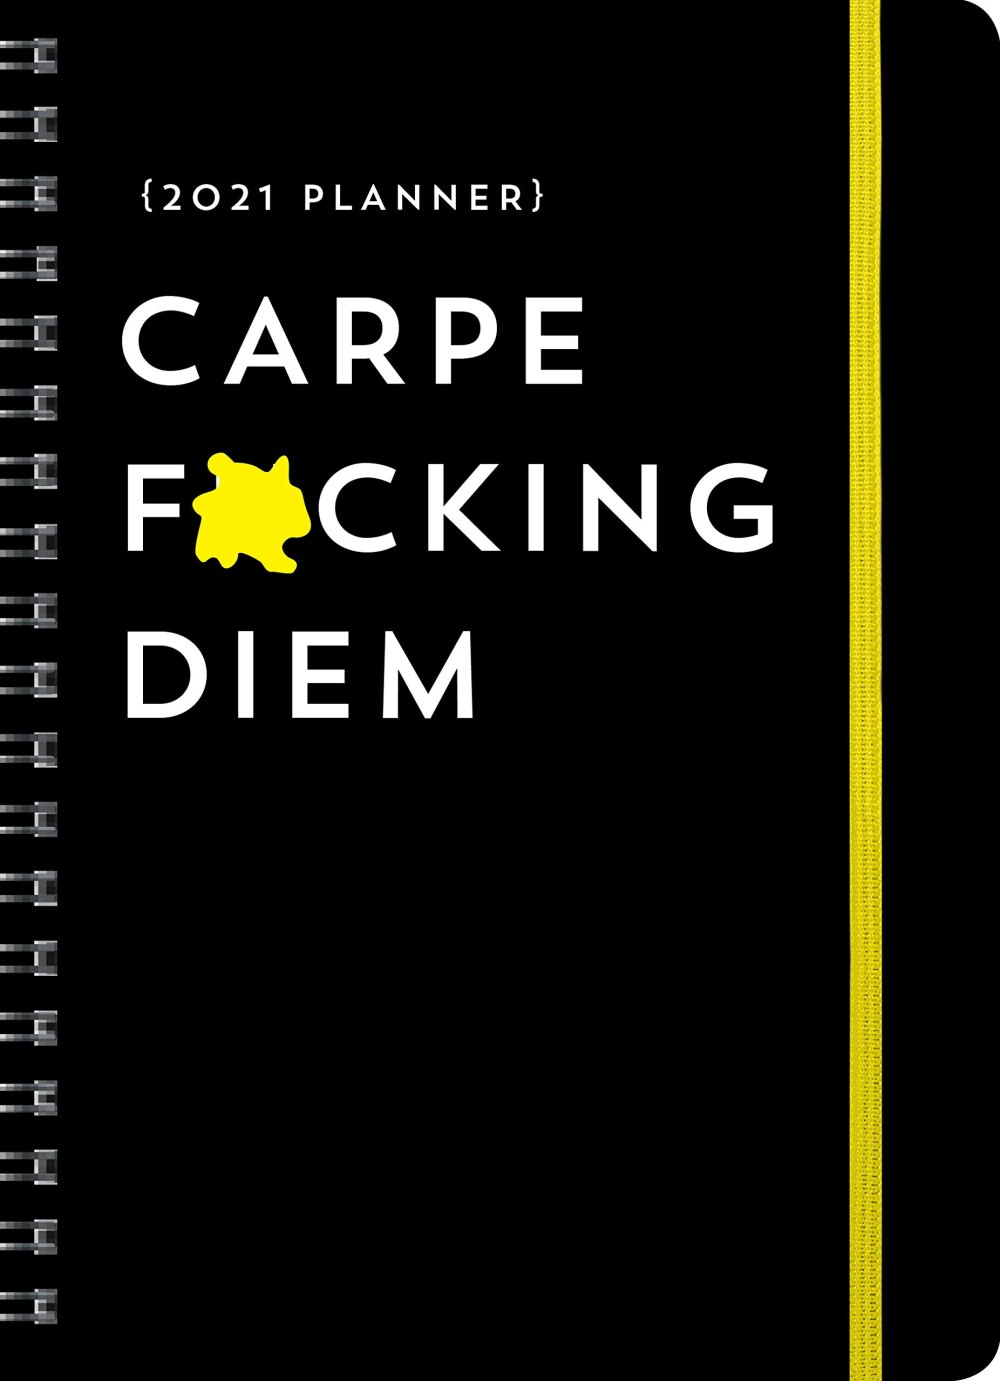 2021 Carpe F*cking Diem Planner